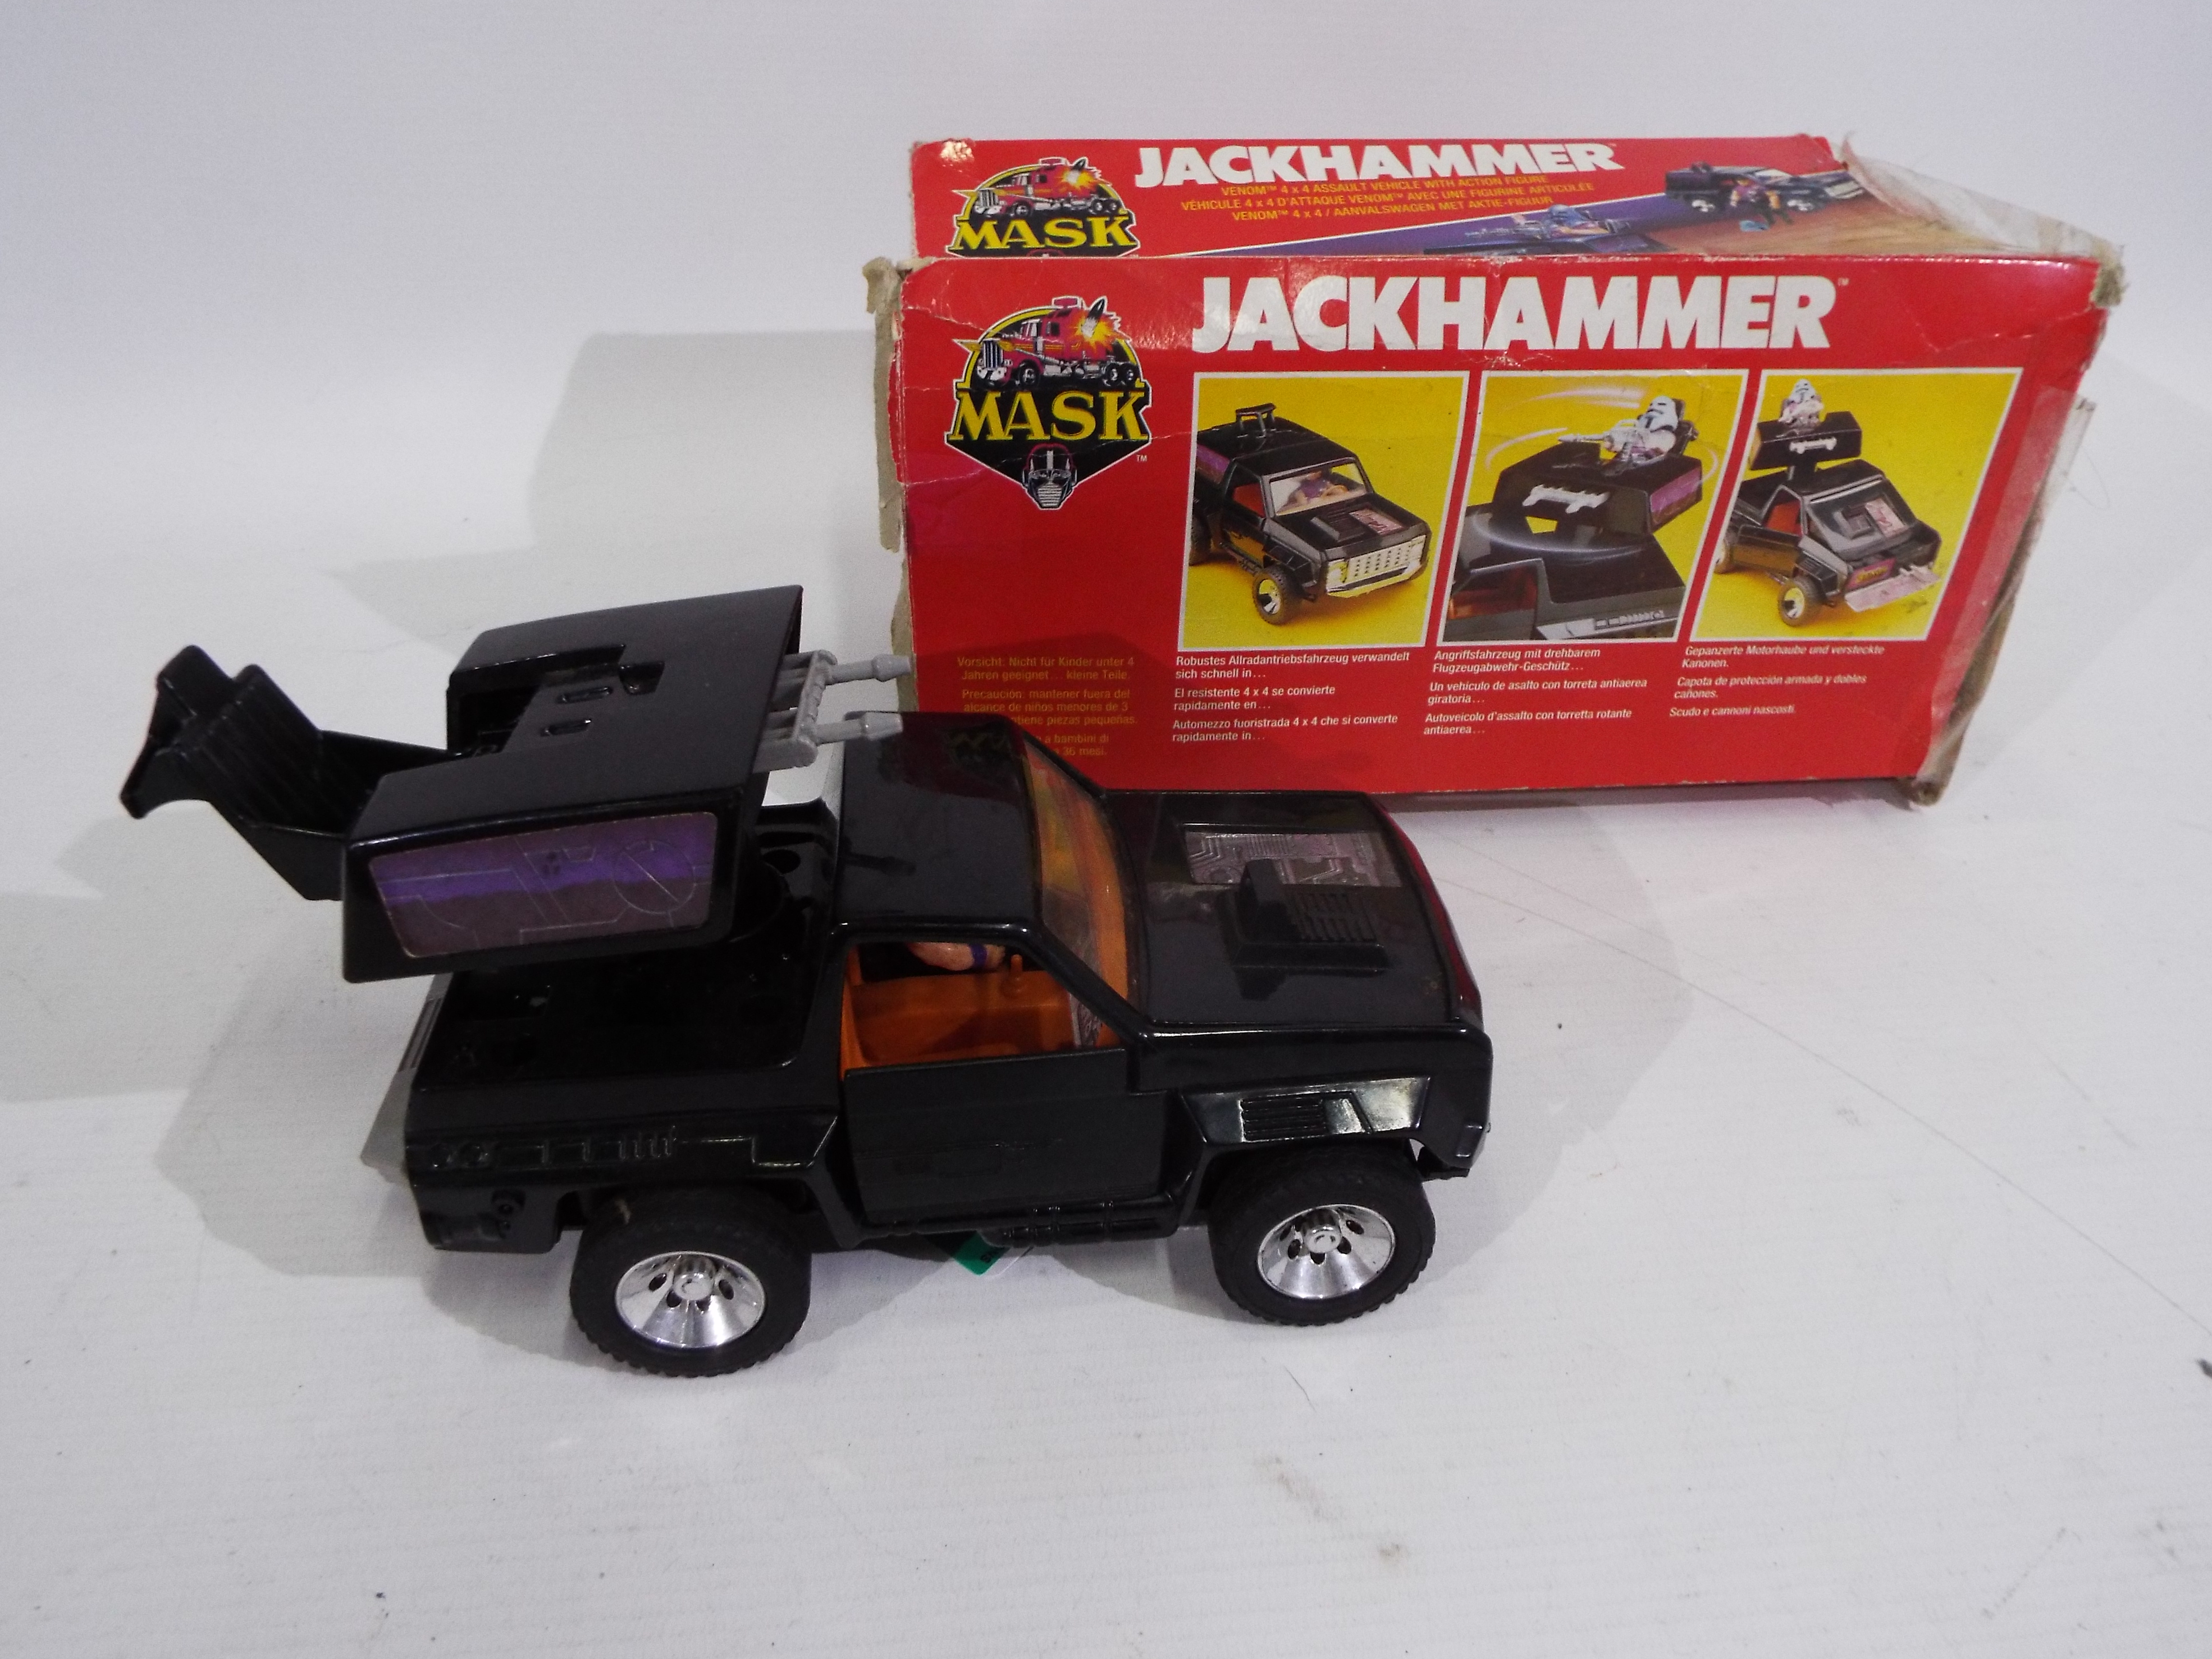 MASK - Kenner - Jackhammer. A boxed Mask 'Jackhammer' from 1987. - Image 2 of 4